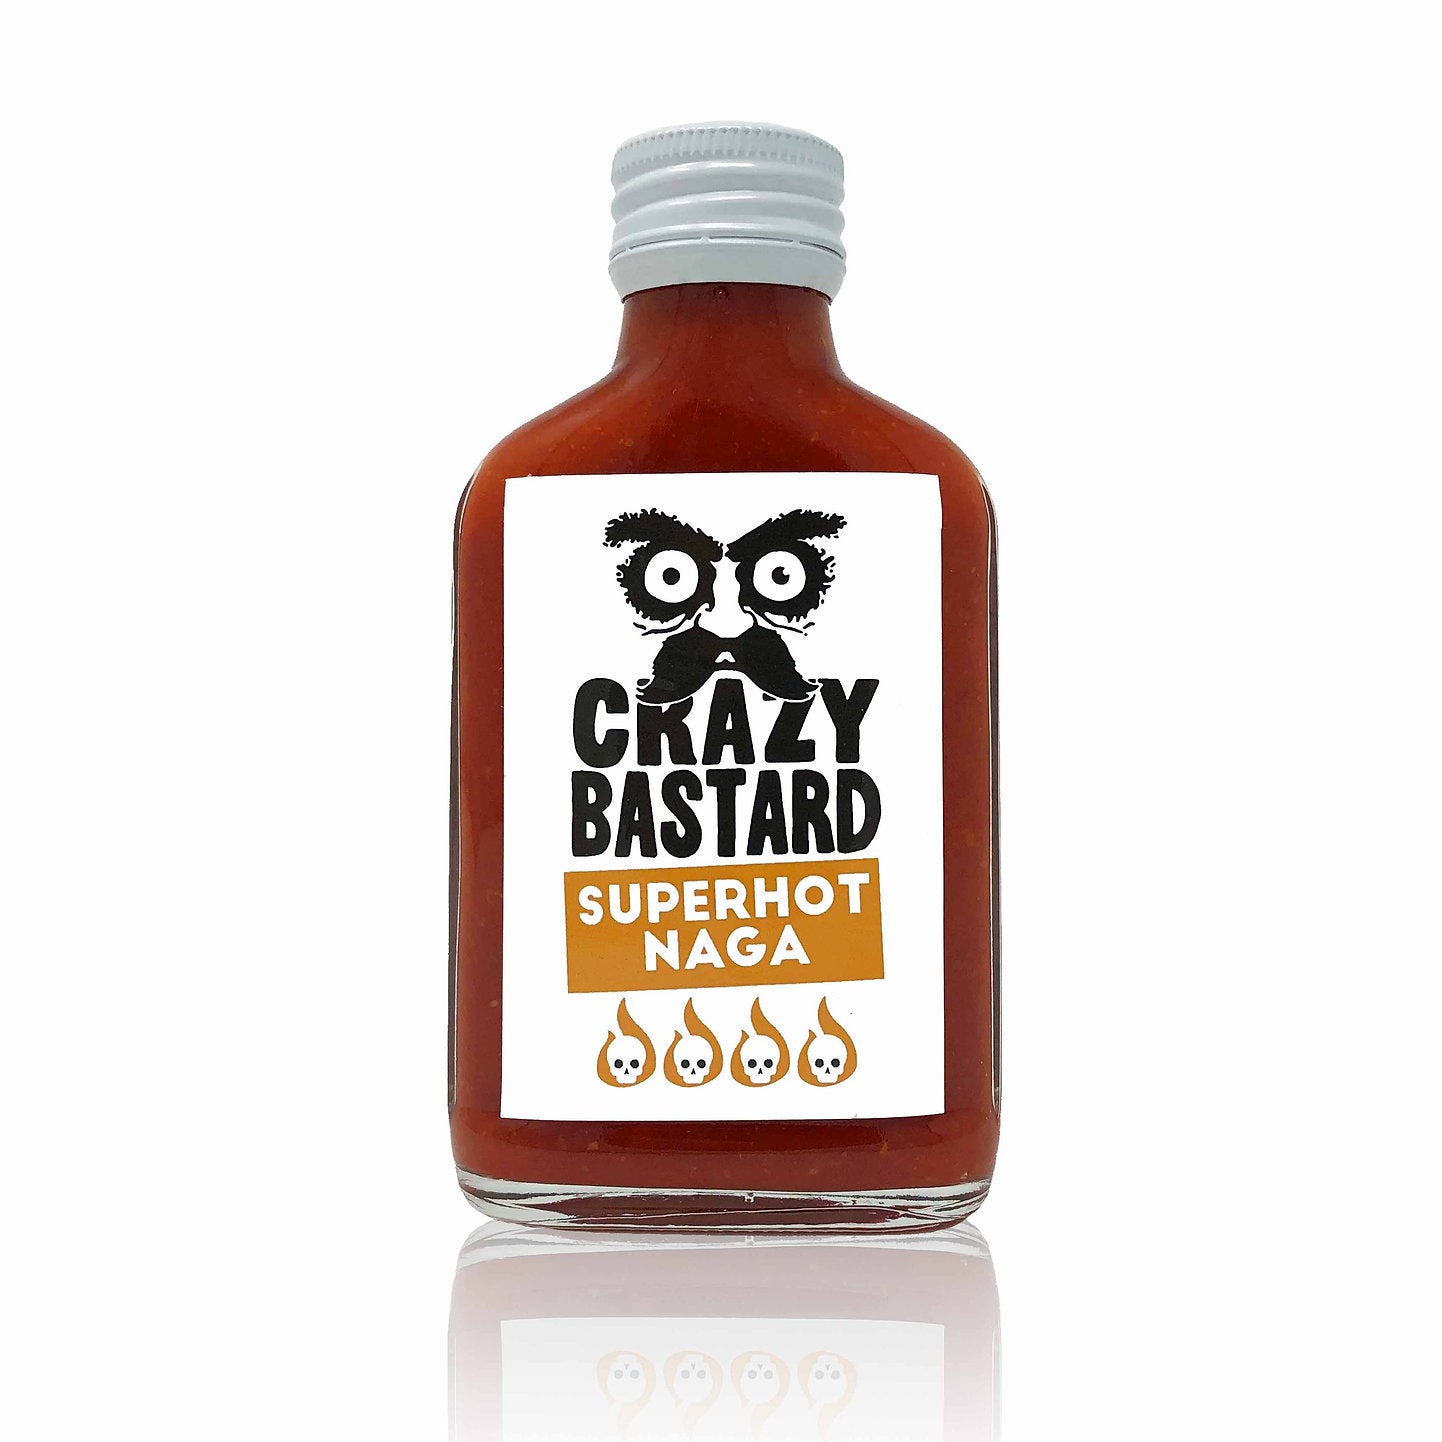 "Superhot Naga"-Chili-Sauce